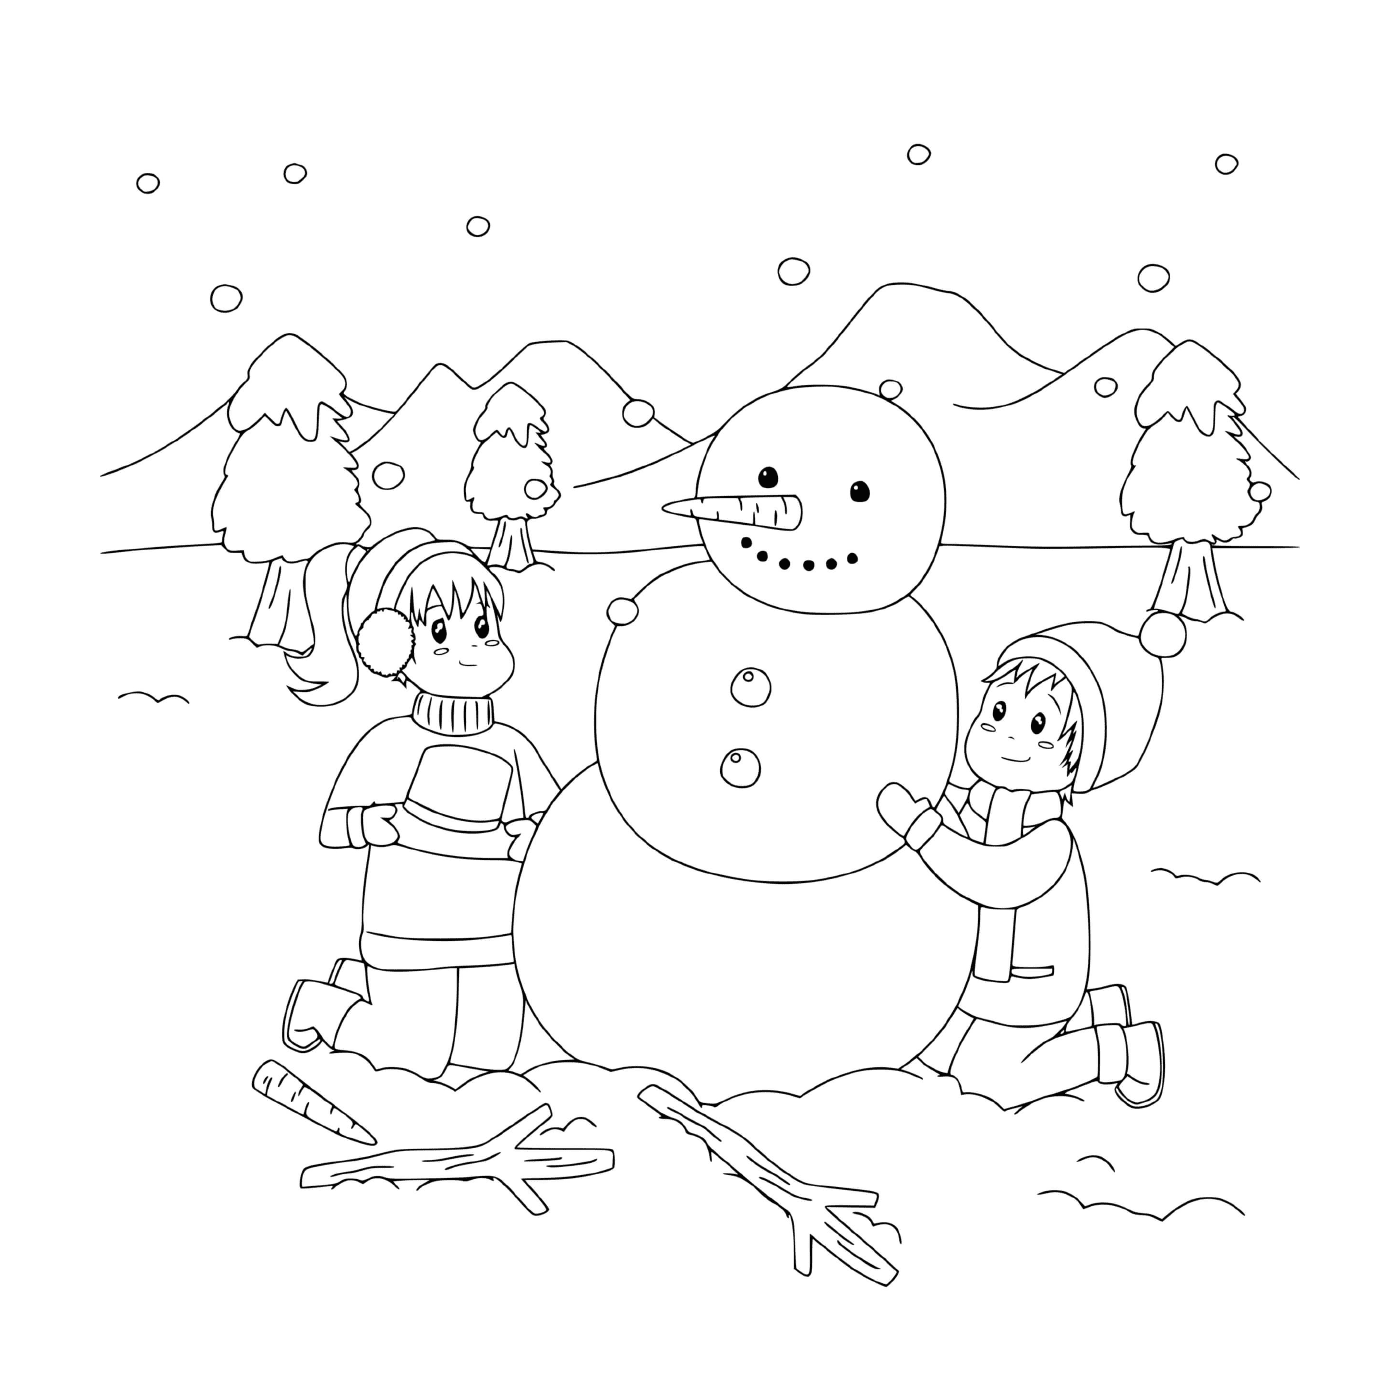  Children building a snowman in a snowy landscape 